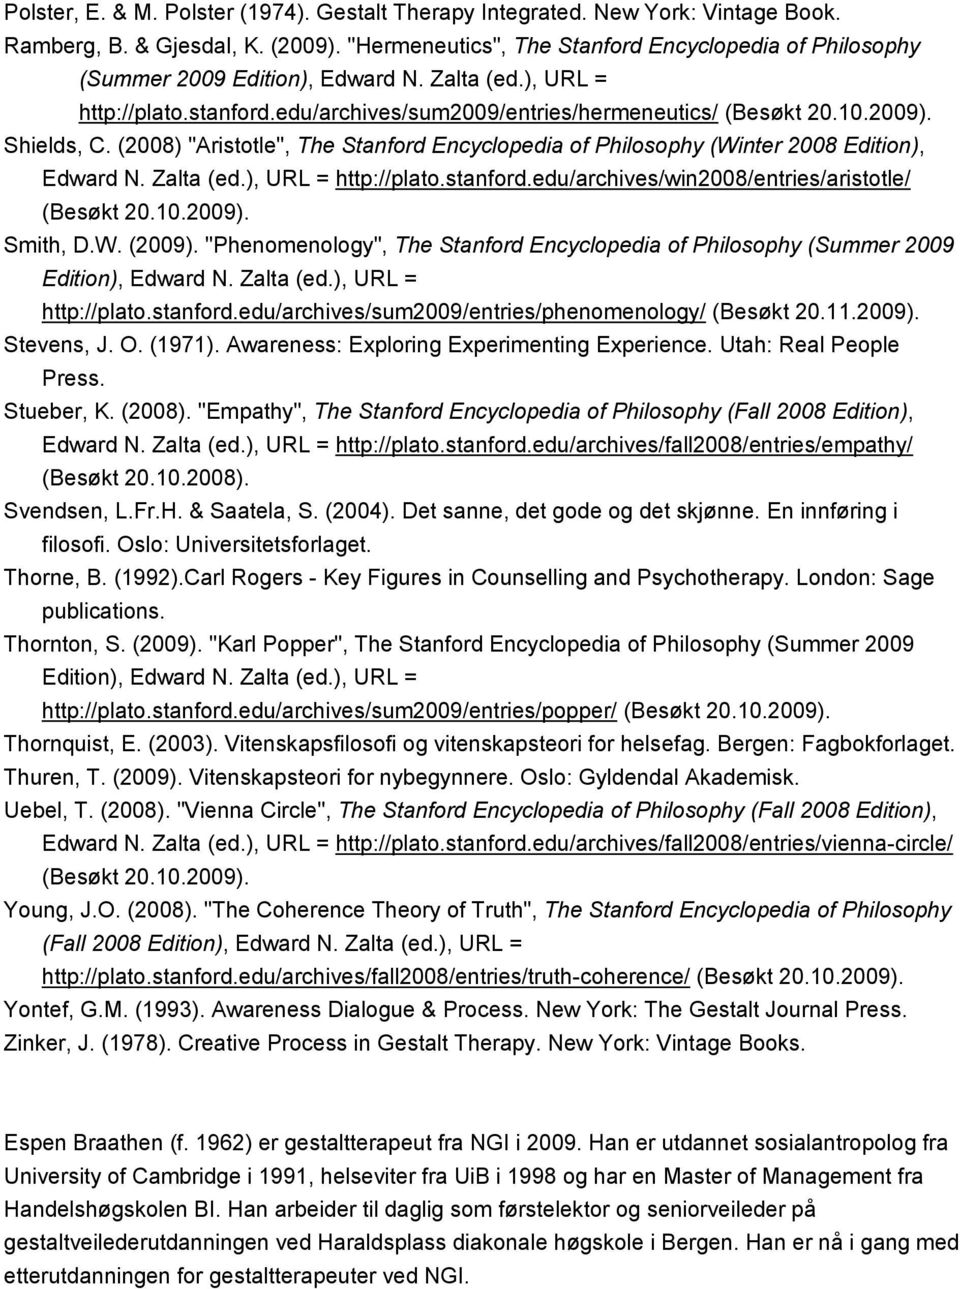 Shields, C. (2008) "Aristotle", The Stanford Encyclopedia of Philosophy (Winter 2008 Edition), Edward N. Zalta (ed.), URL = http://plato.stanford.edu/archives/win2008/entries/aristotle/ (Besøkt 20.10.